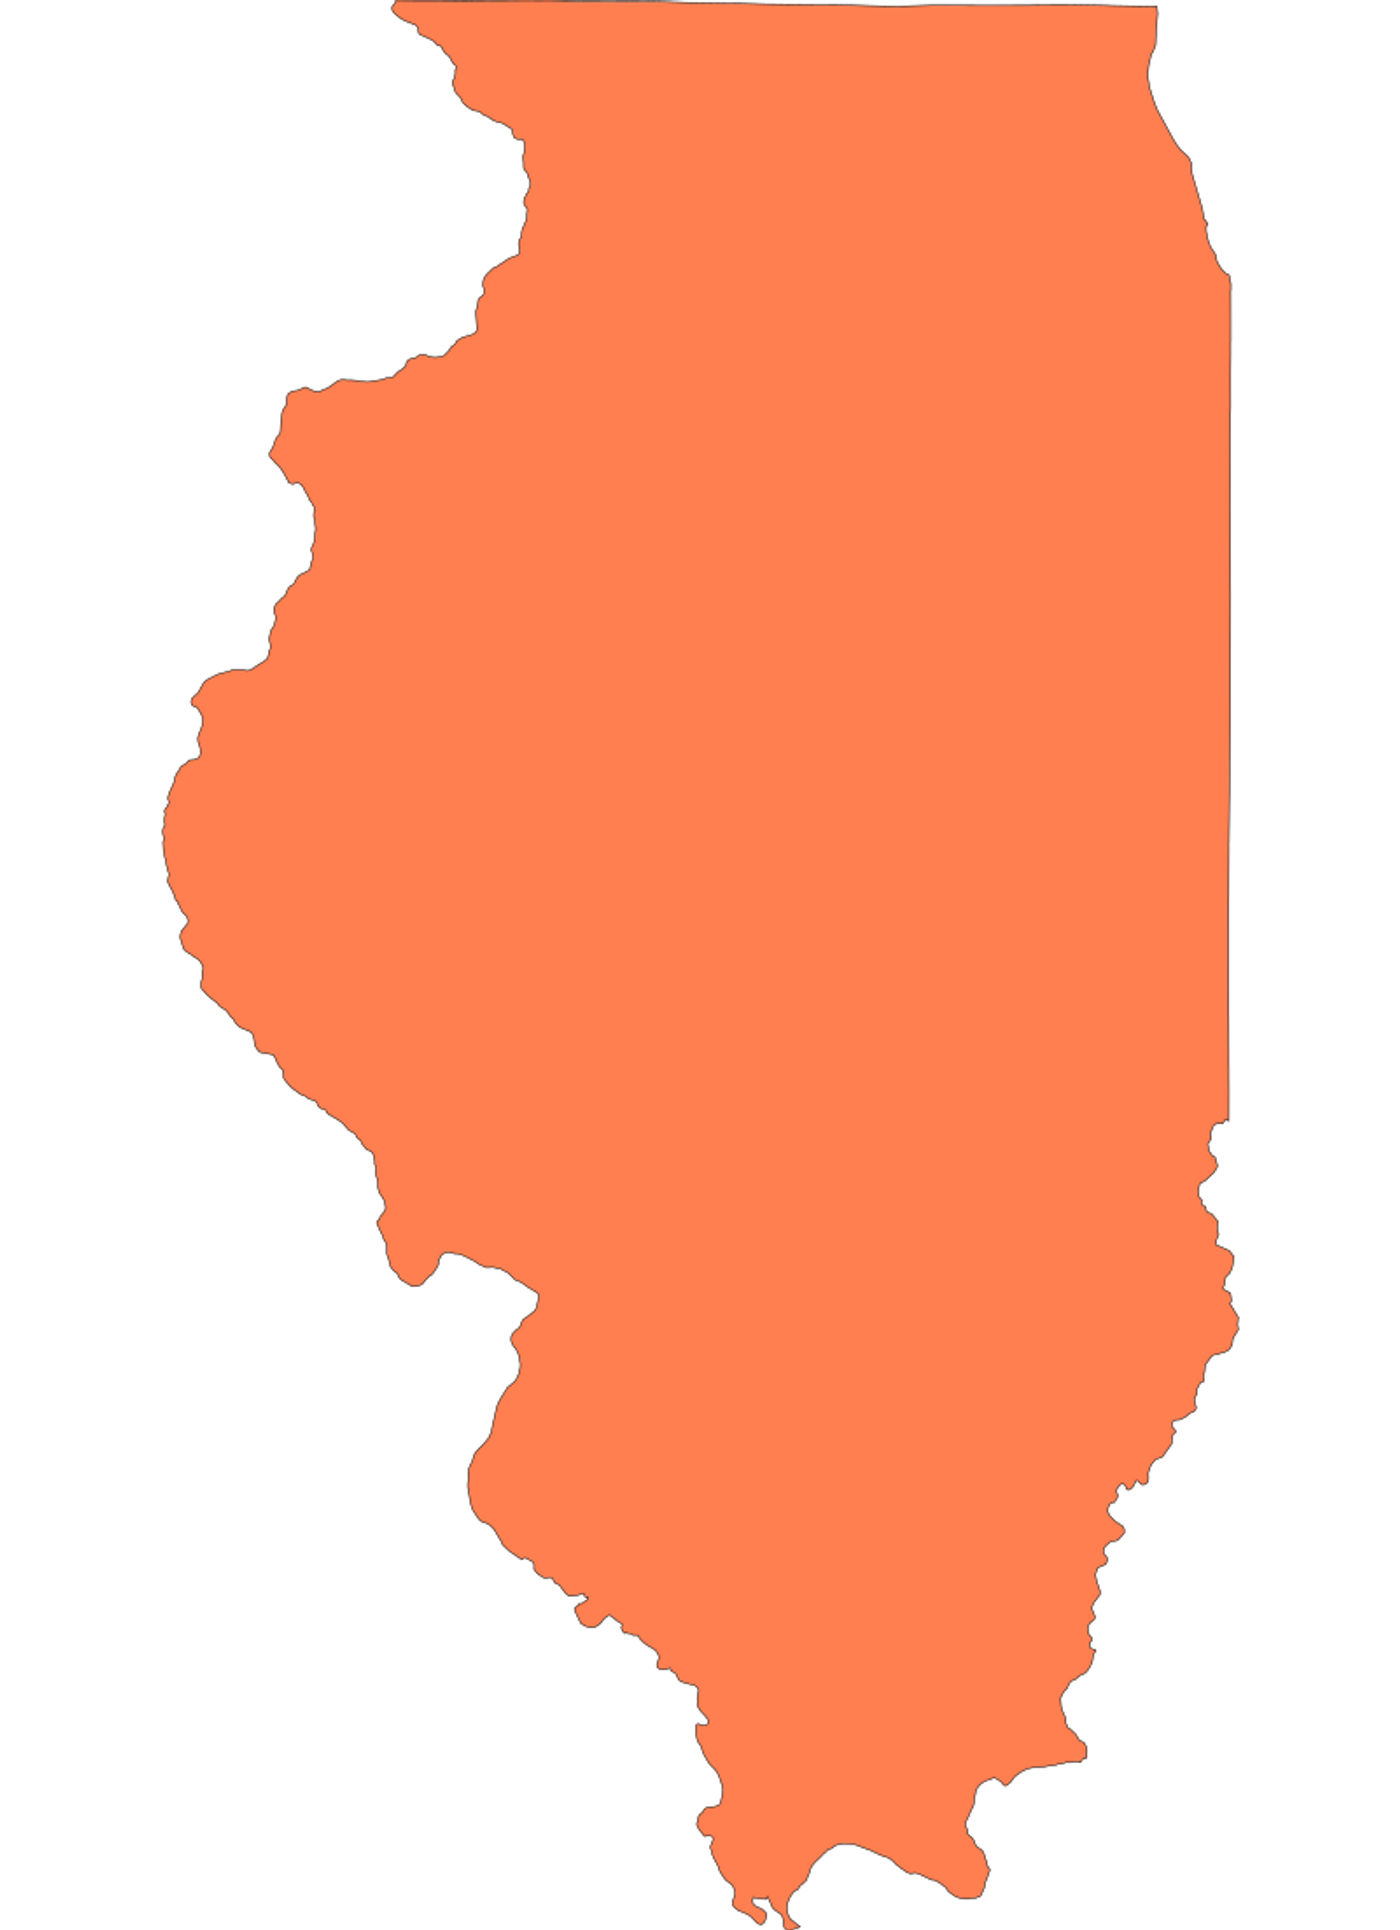 Illinois Outline